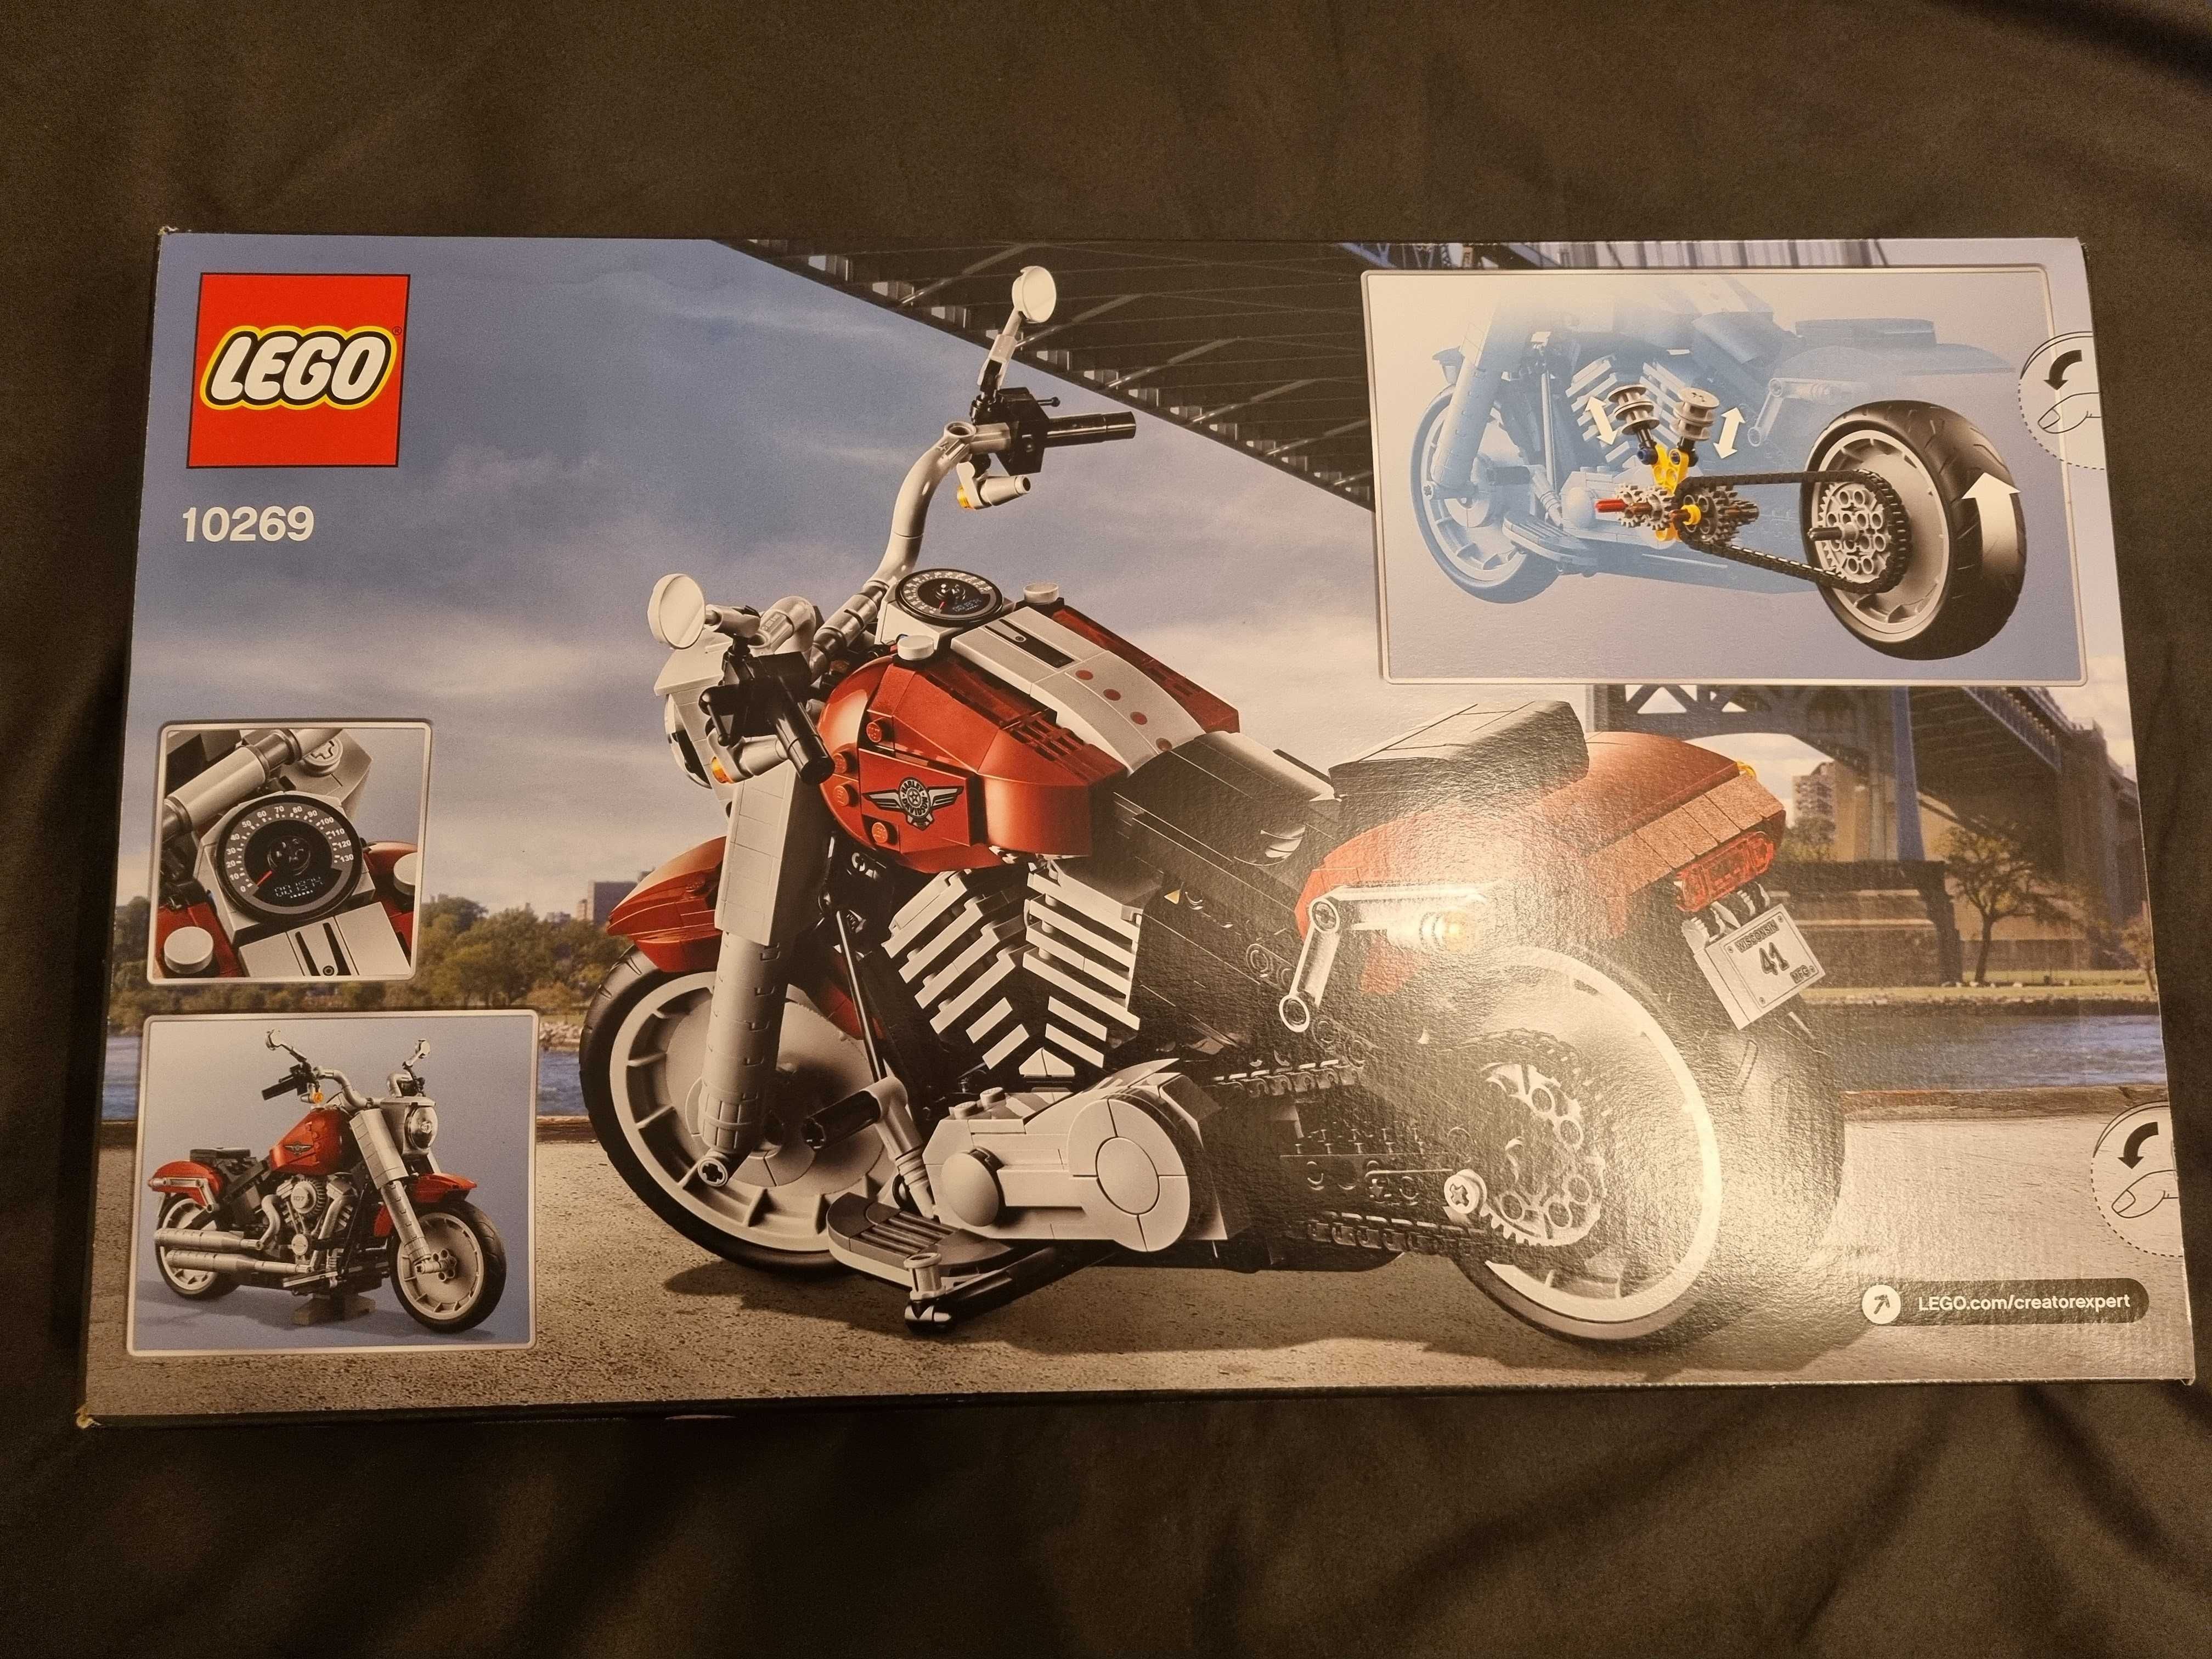 LEGO Creator Expert 10269 Harley Davidson Fat Boy